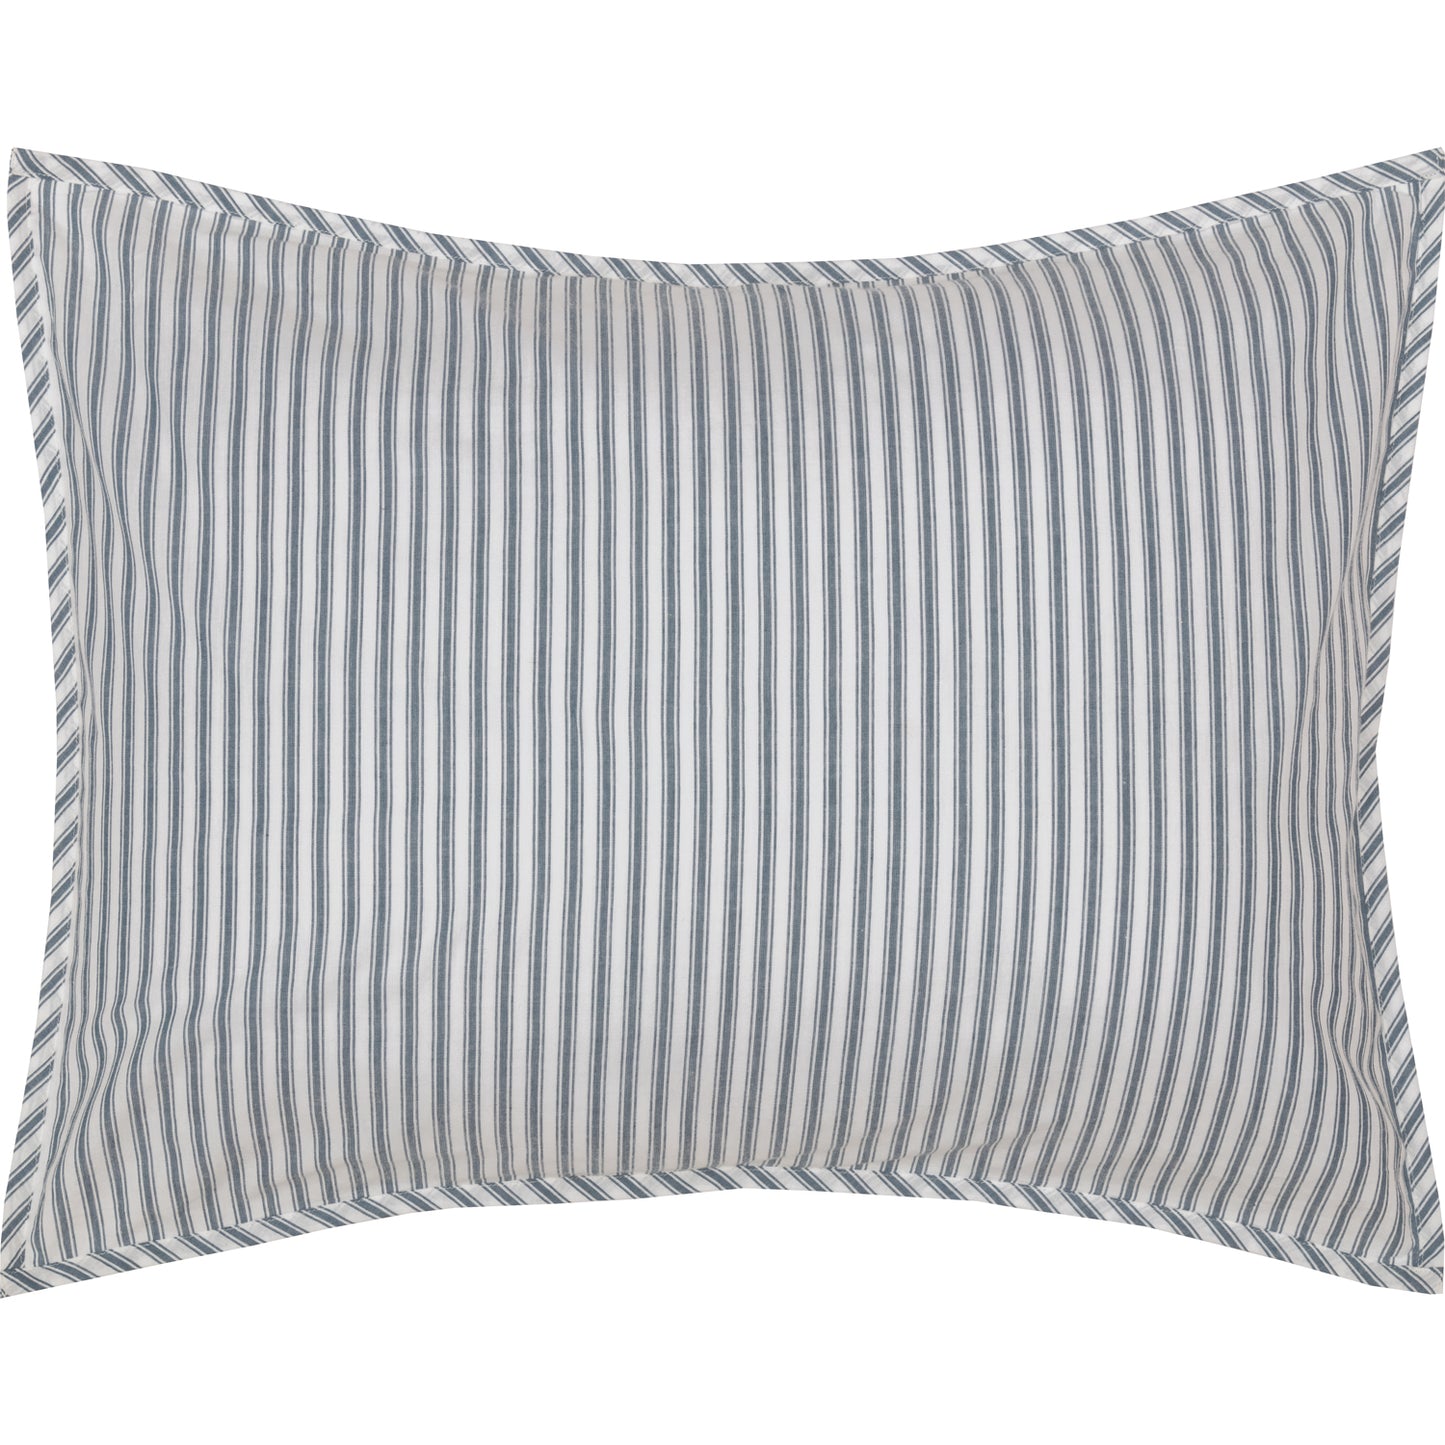 Sawyer Mill Blue Ticking Stripe 5pc Daybed Quilt Set 1 Quilt, 1 Bed Skirt, 3 Standard Shams SpadezStore